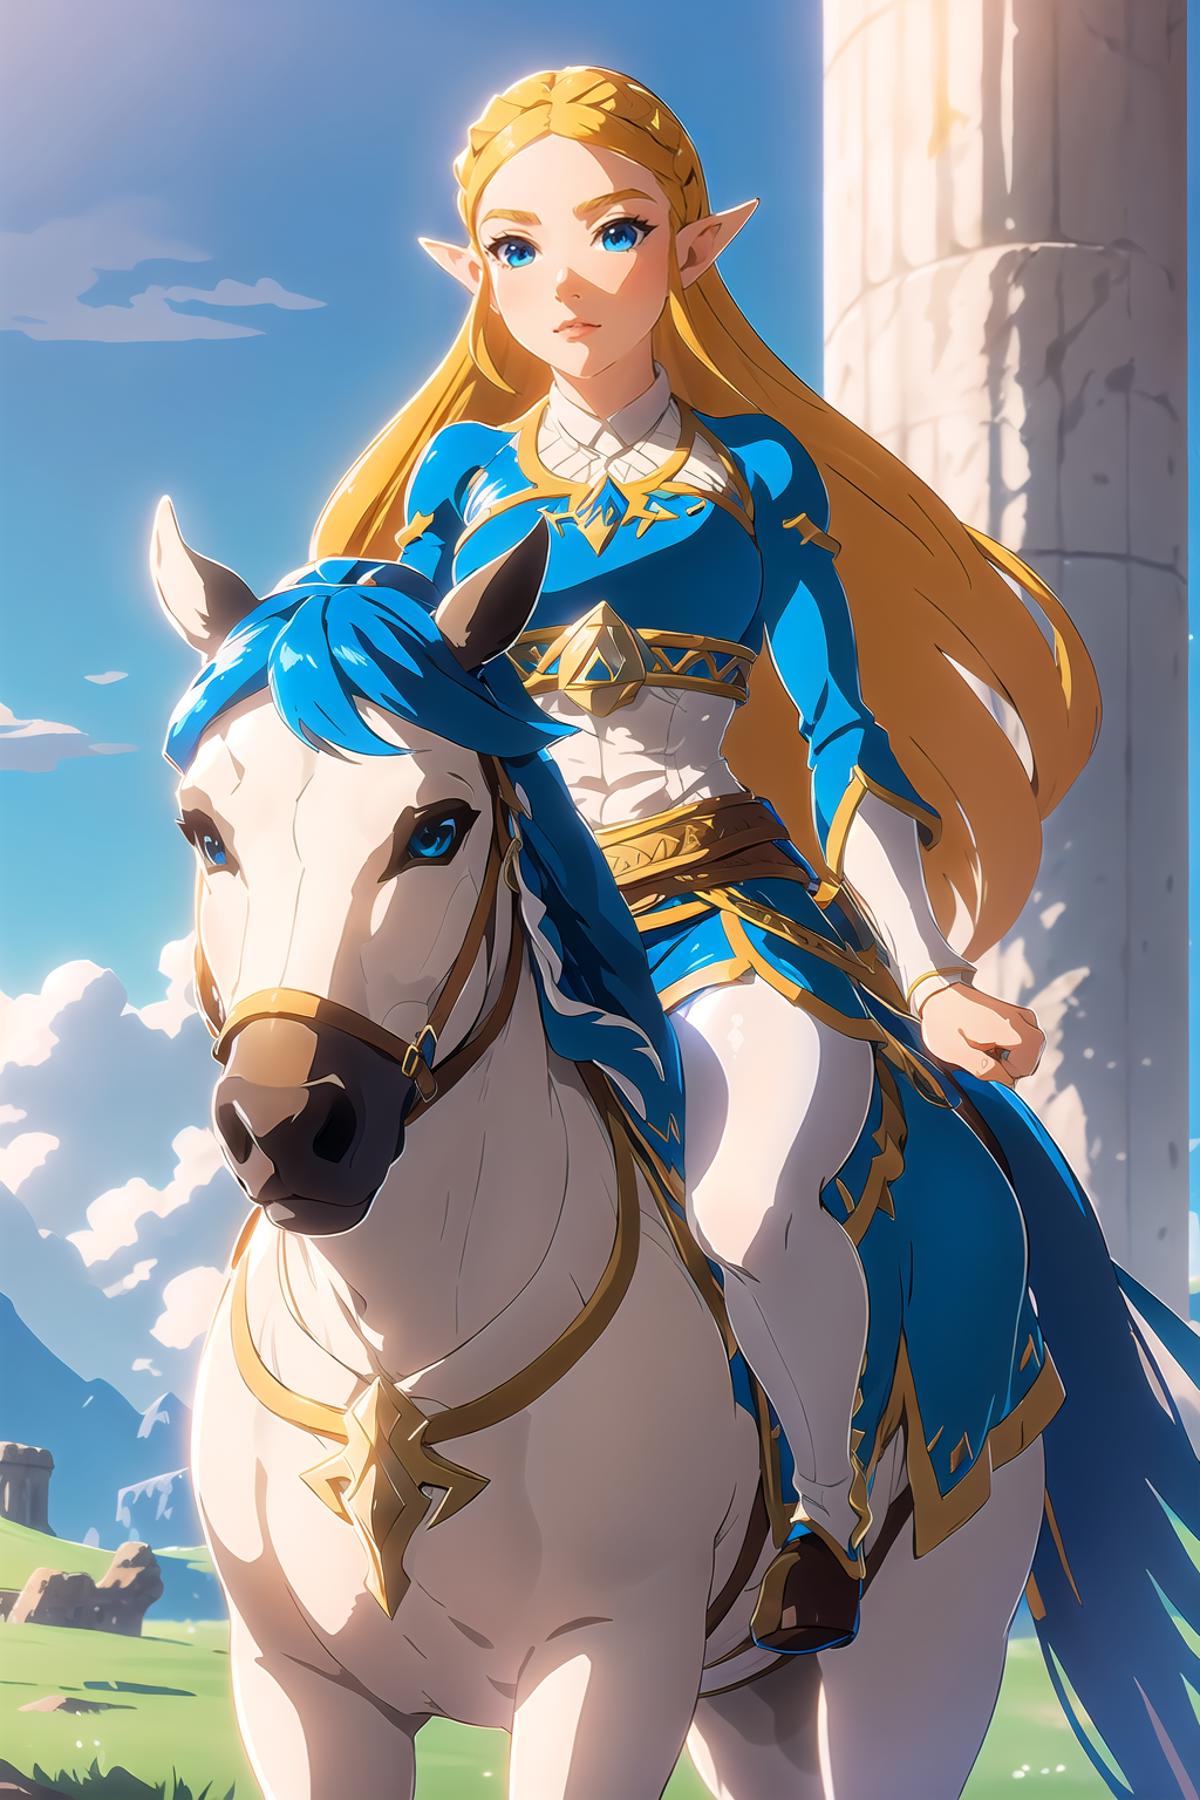 The Legend of Zelda - Princess Zelda image by Clash